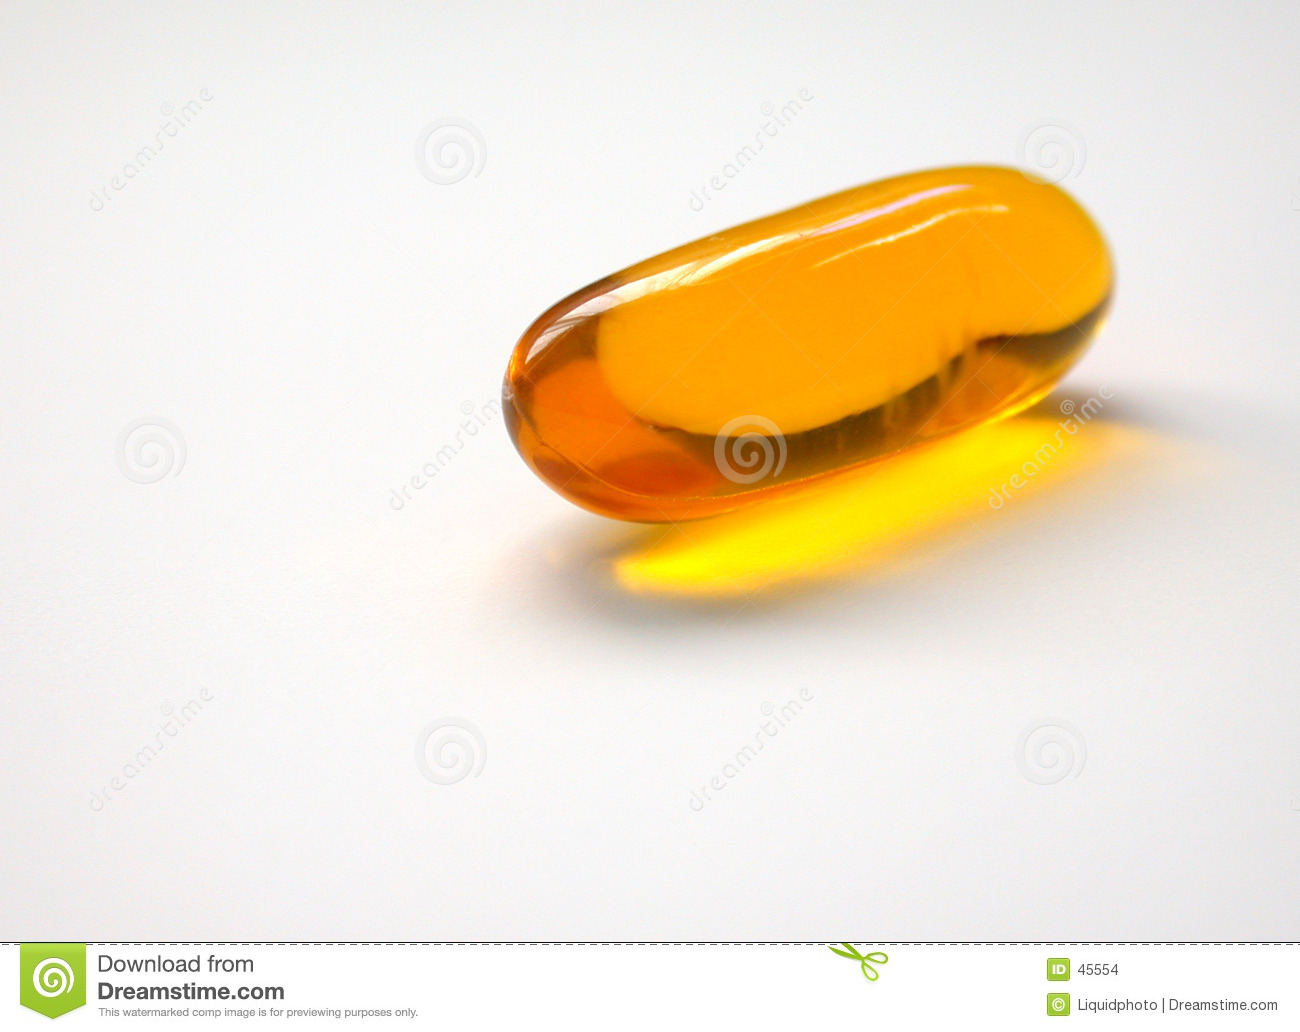 Great Yellow Pills 1300 X 1032   247 Kb   Jpeg